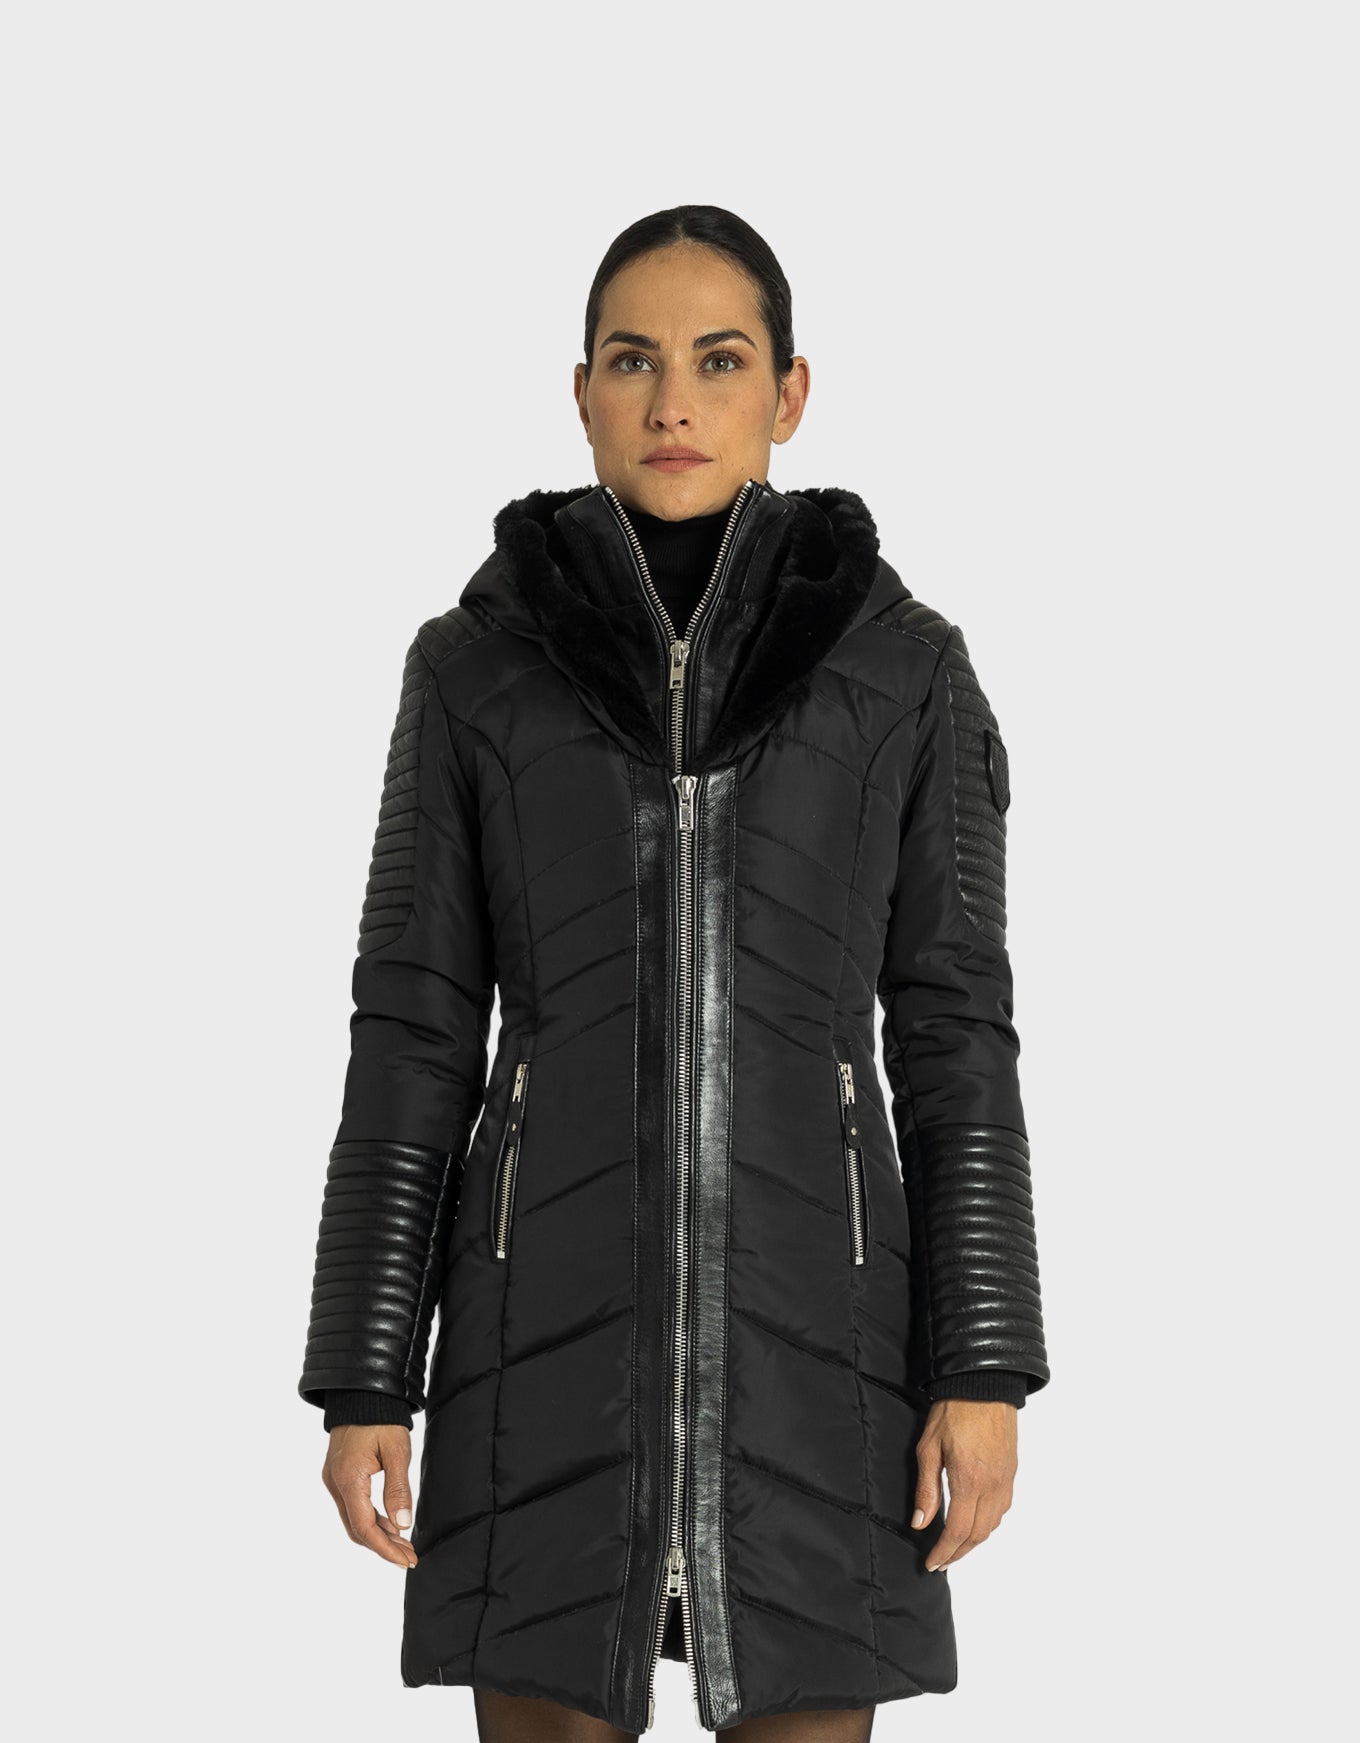 Magellan womens jacket, wył 60% ciężki handel 